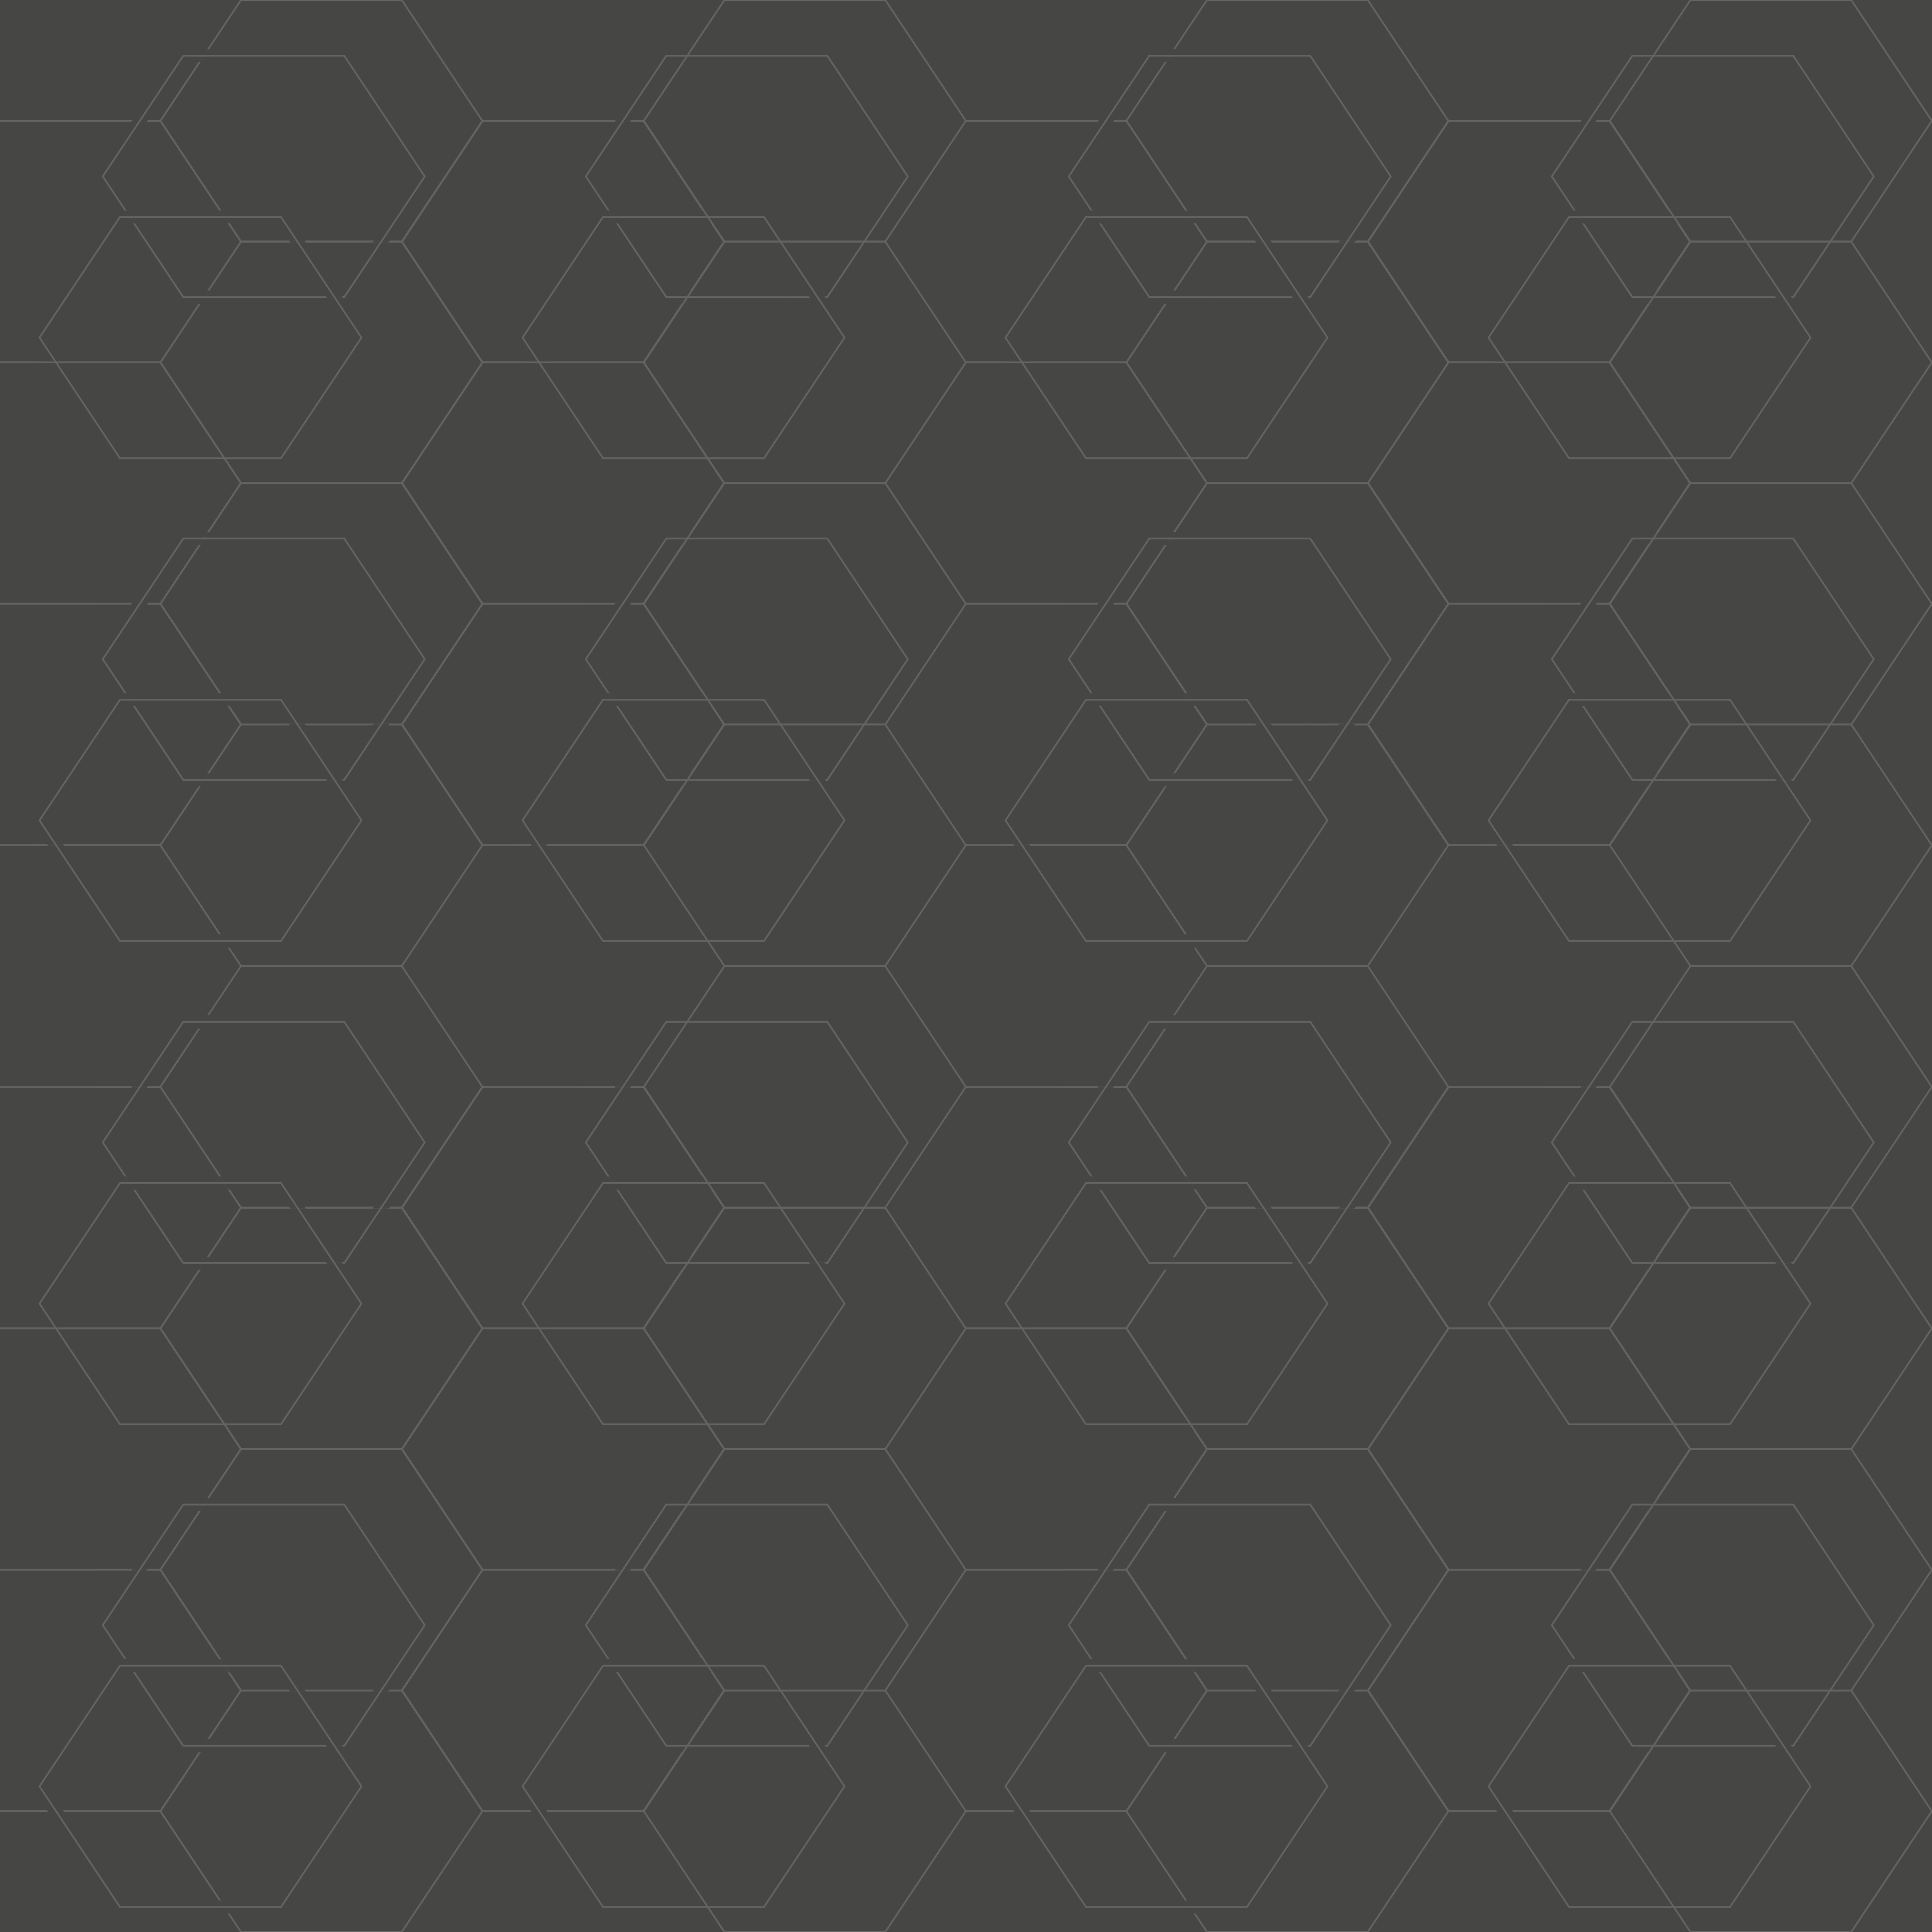 Hexagons schlicht | Folie matt | OF-miwkkY7ur08stDJ8J2Q